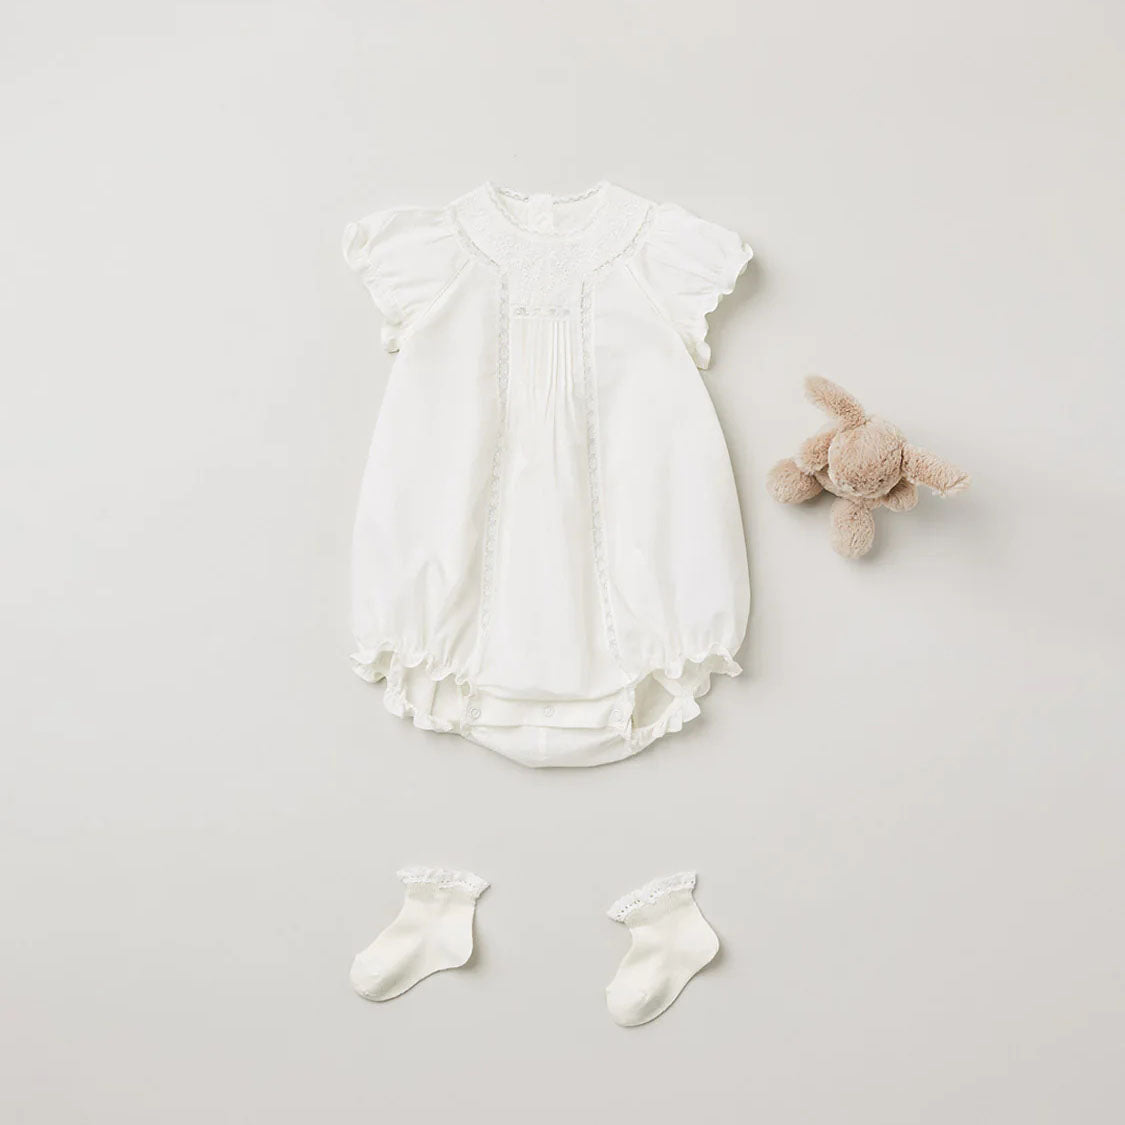 Baby Girls White Cotton Babysuit